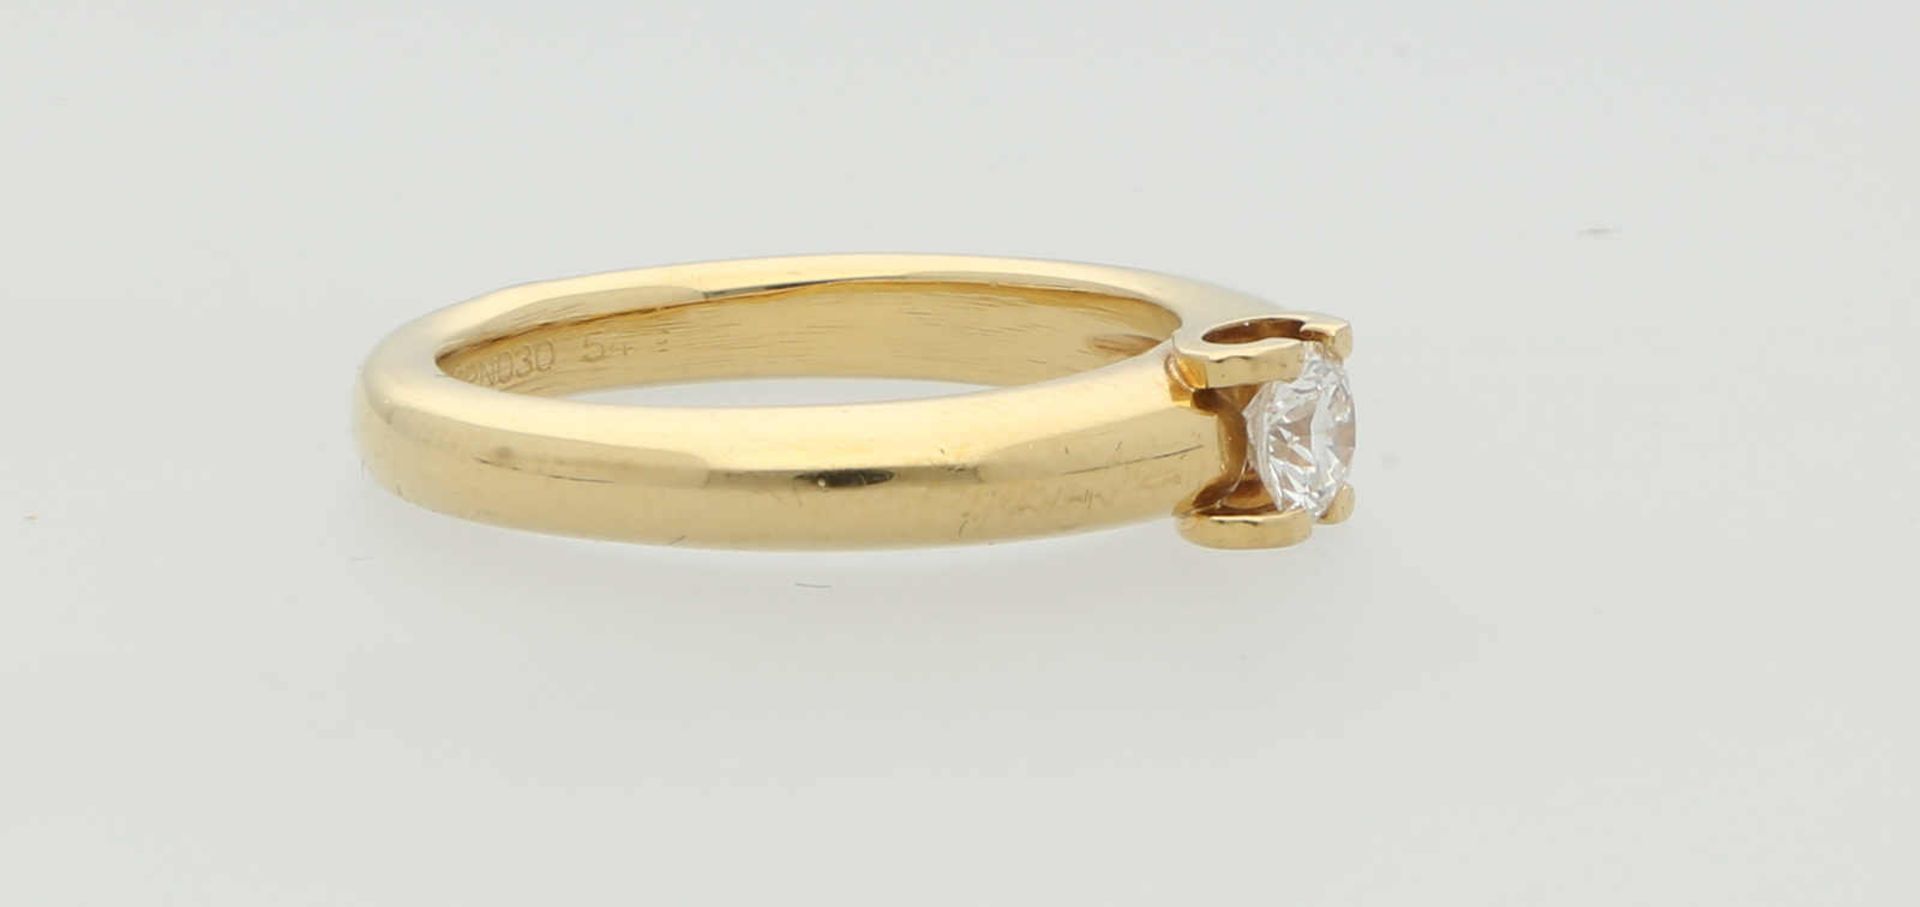 CARTIER C de Cartier-Ring Moderner Solitär-Ring, signiert Cartier Nr. 22PN030, in Gelbgold 18K mit - Bild 2 aus 3